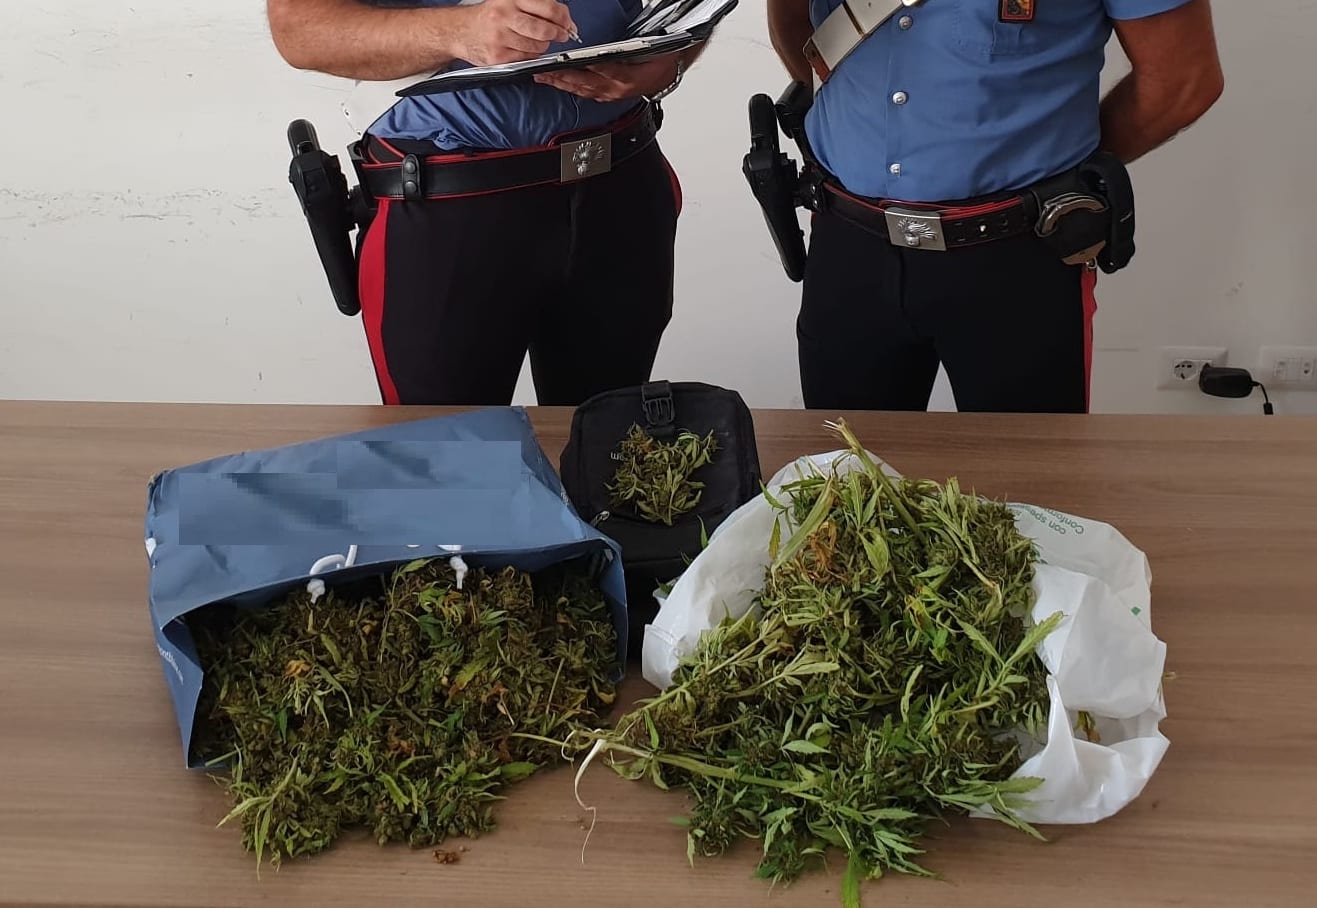 Carlentini, in giro con buste cariche di marijuana: arrestato minorenne